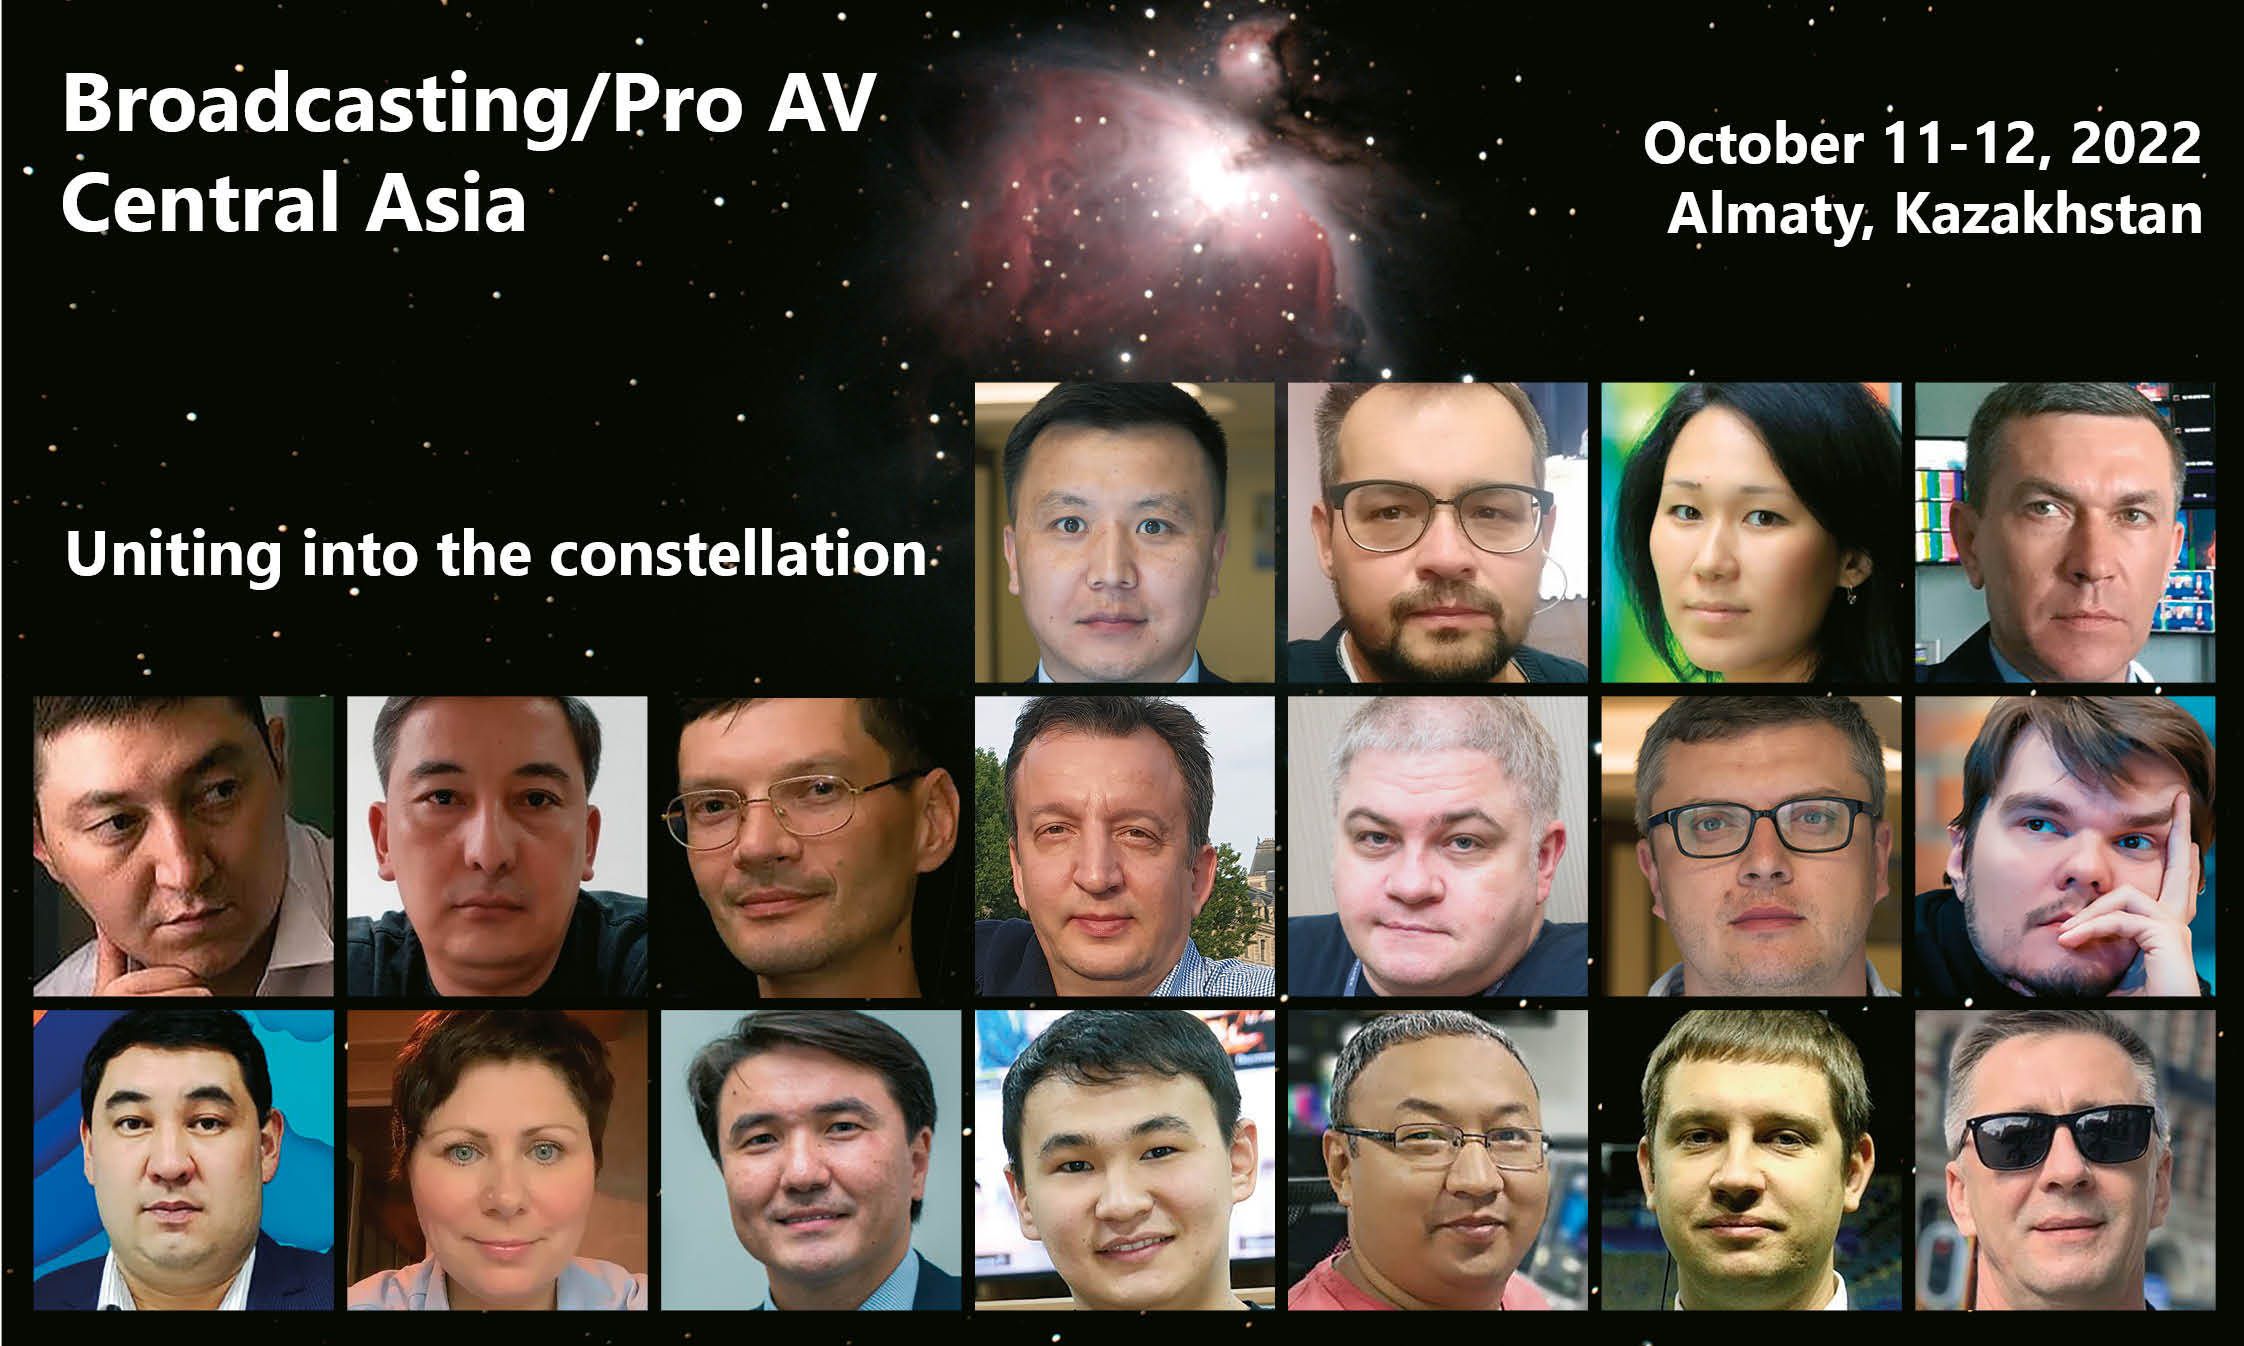 Broadcasting/Pro AV Central Asia Conference will be held October 11-12 in Almaty, Kazakhstan